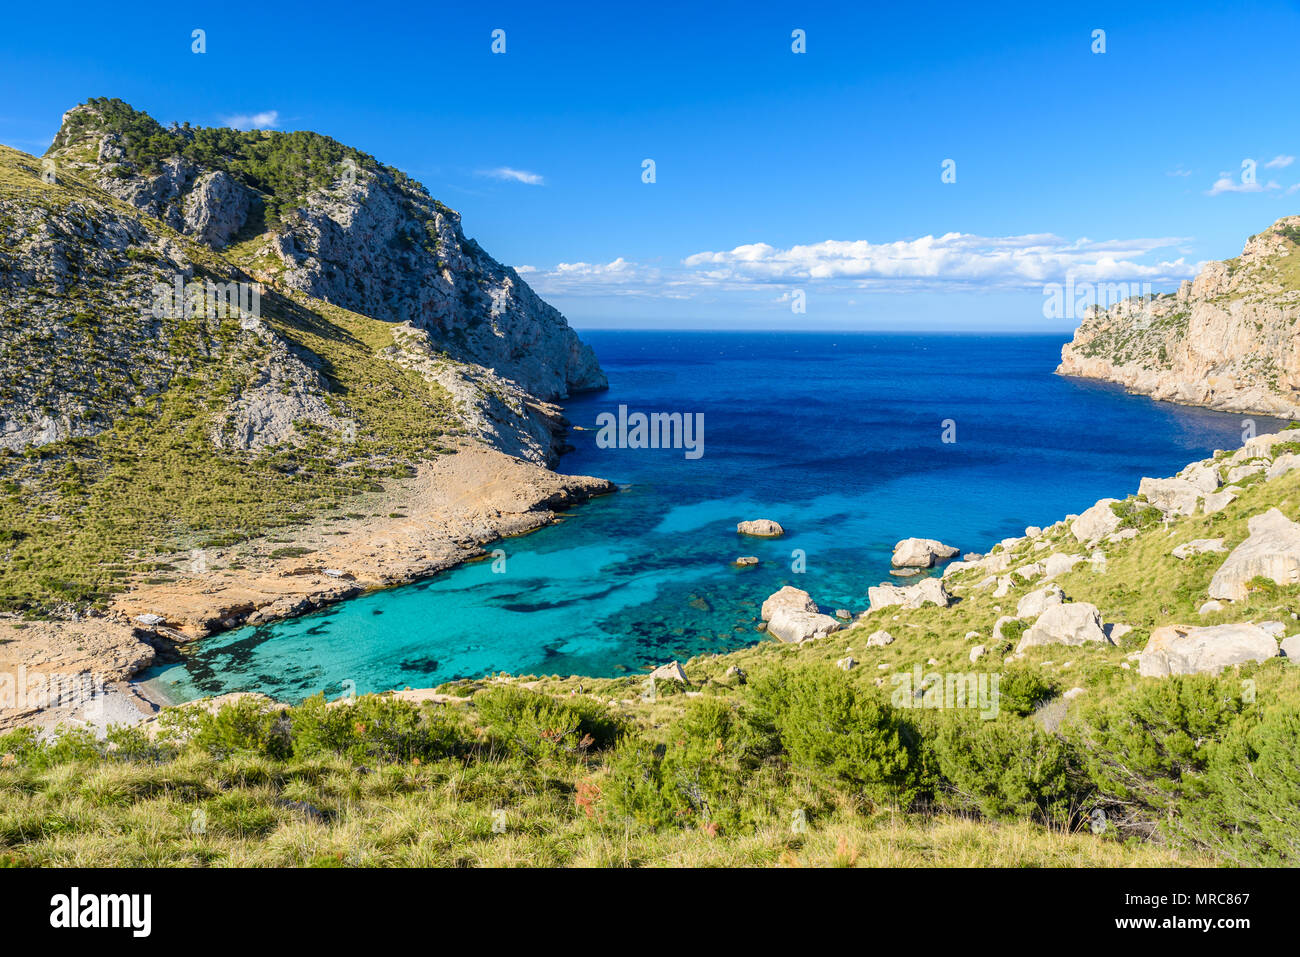 Cala figuera at cap formentor - beautiful coast and beach of Mallorca, Spain Stock Photo